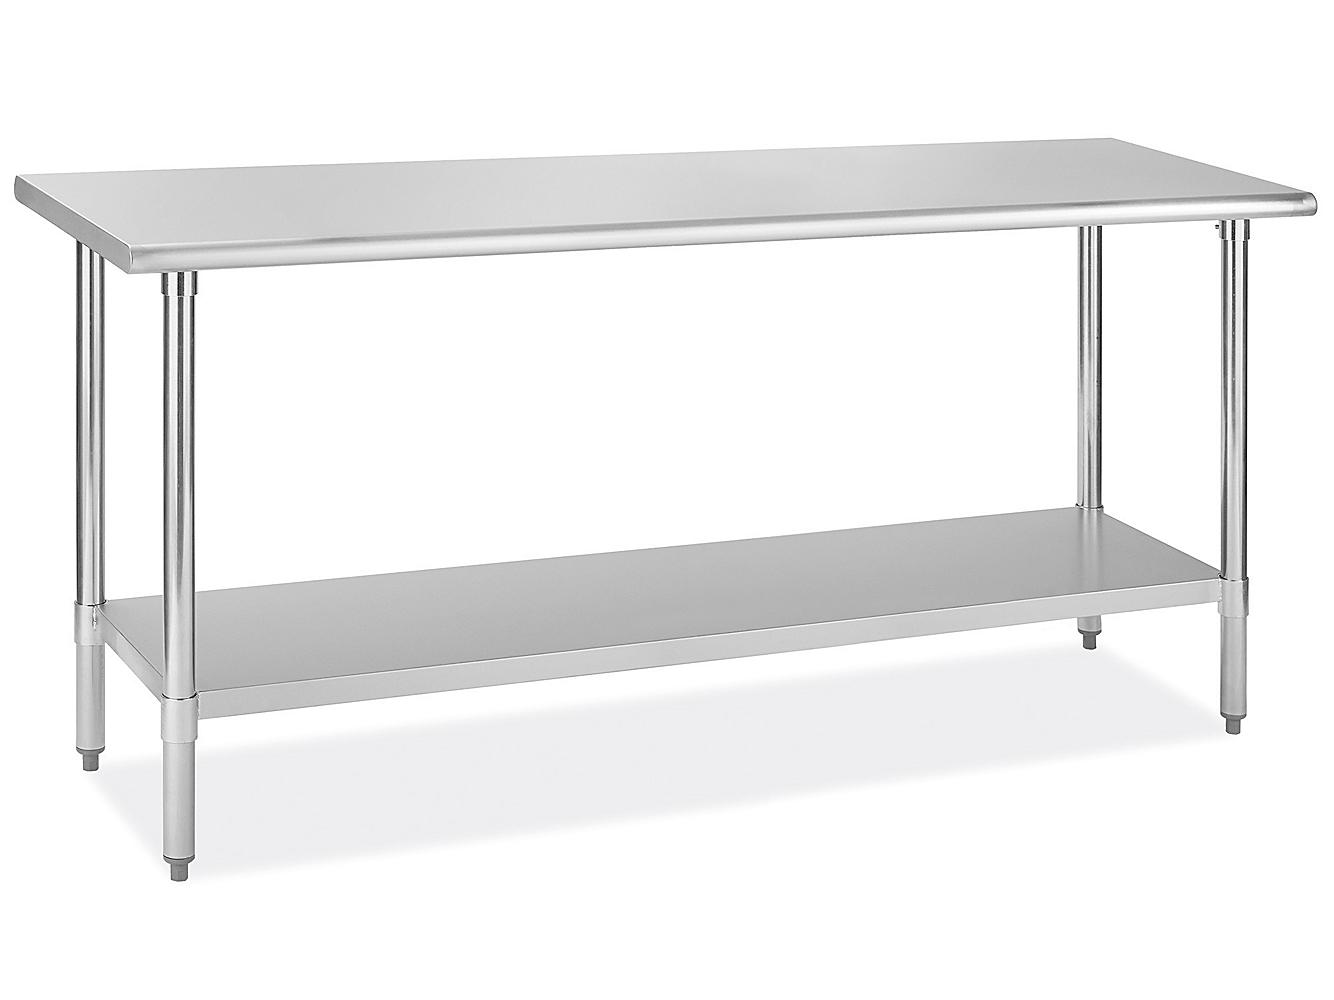 Standard Stainless Steel Worktable with Bottom Shelf - 72 x 24